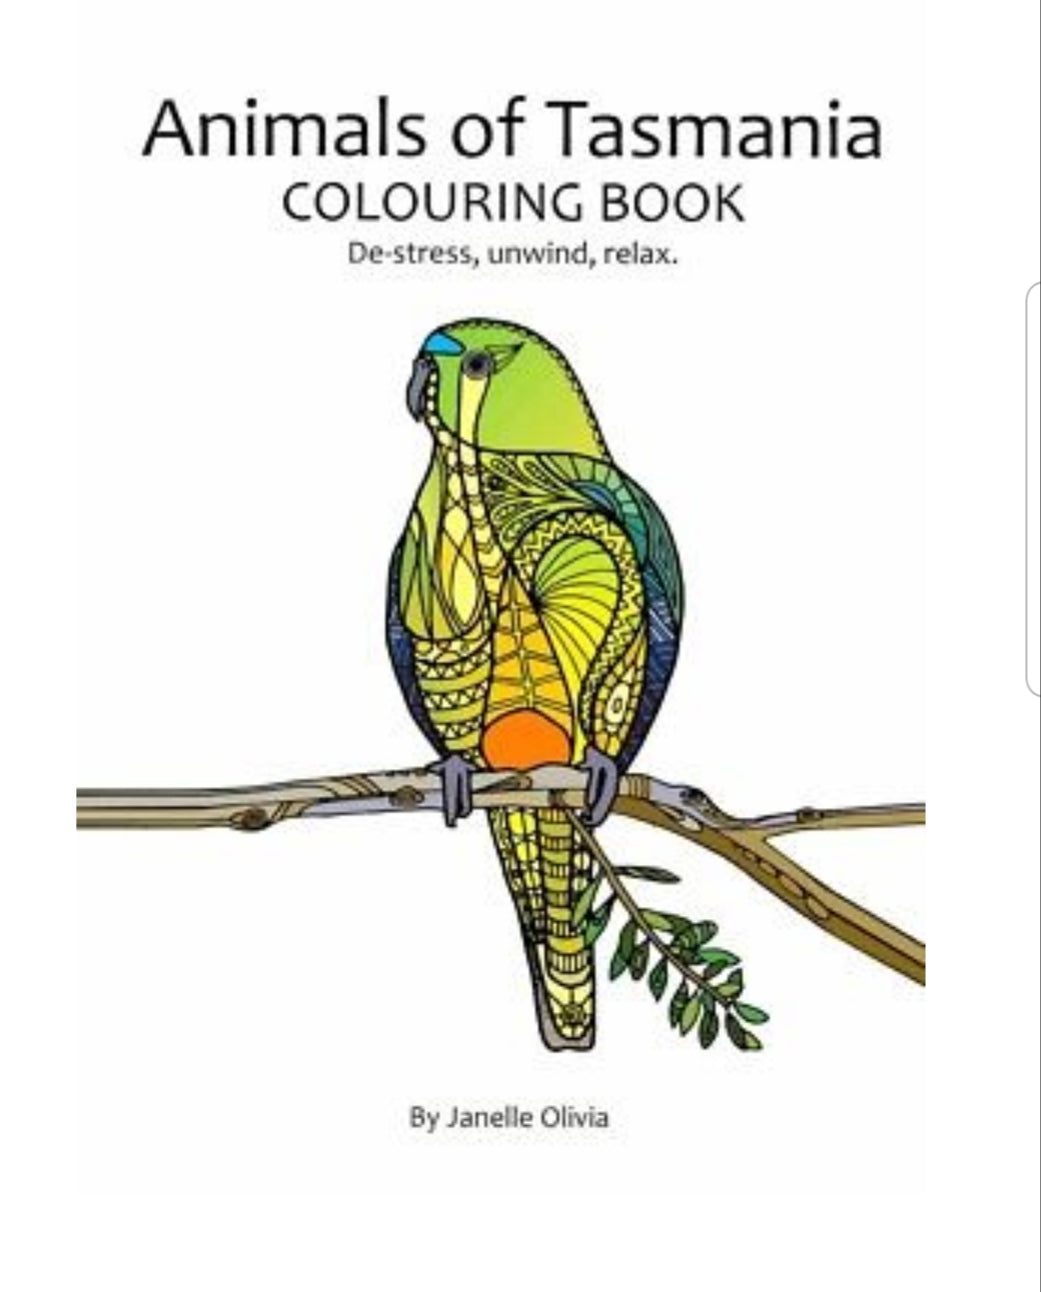 Animals of Australia Colouring Books book Janelle Olivia Animals of Tasmania 